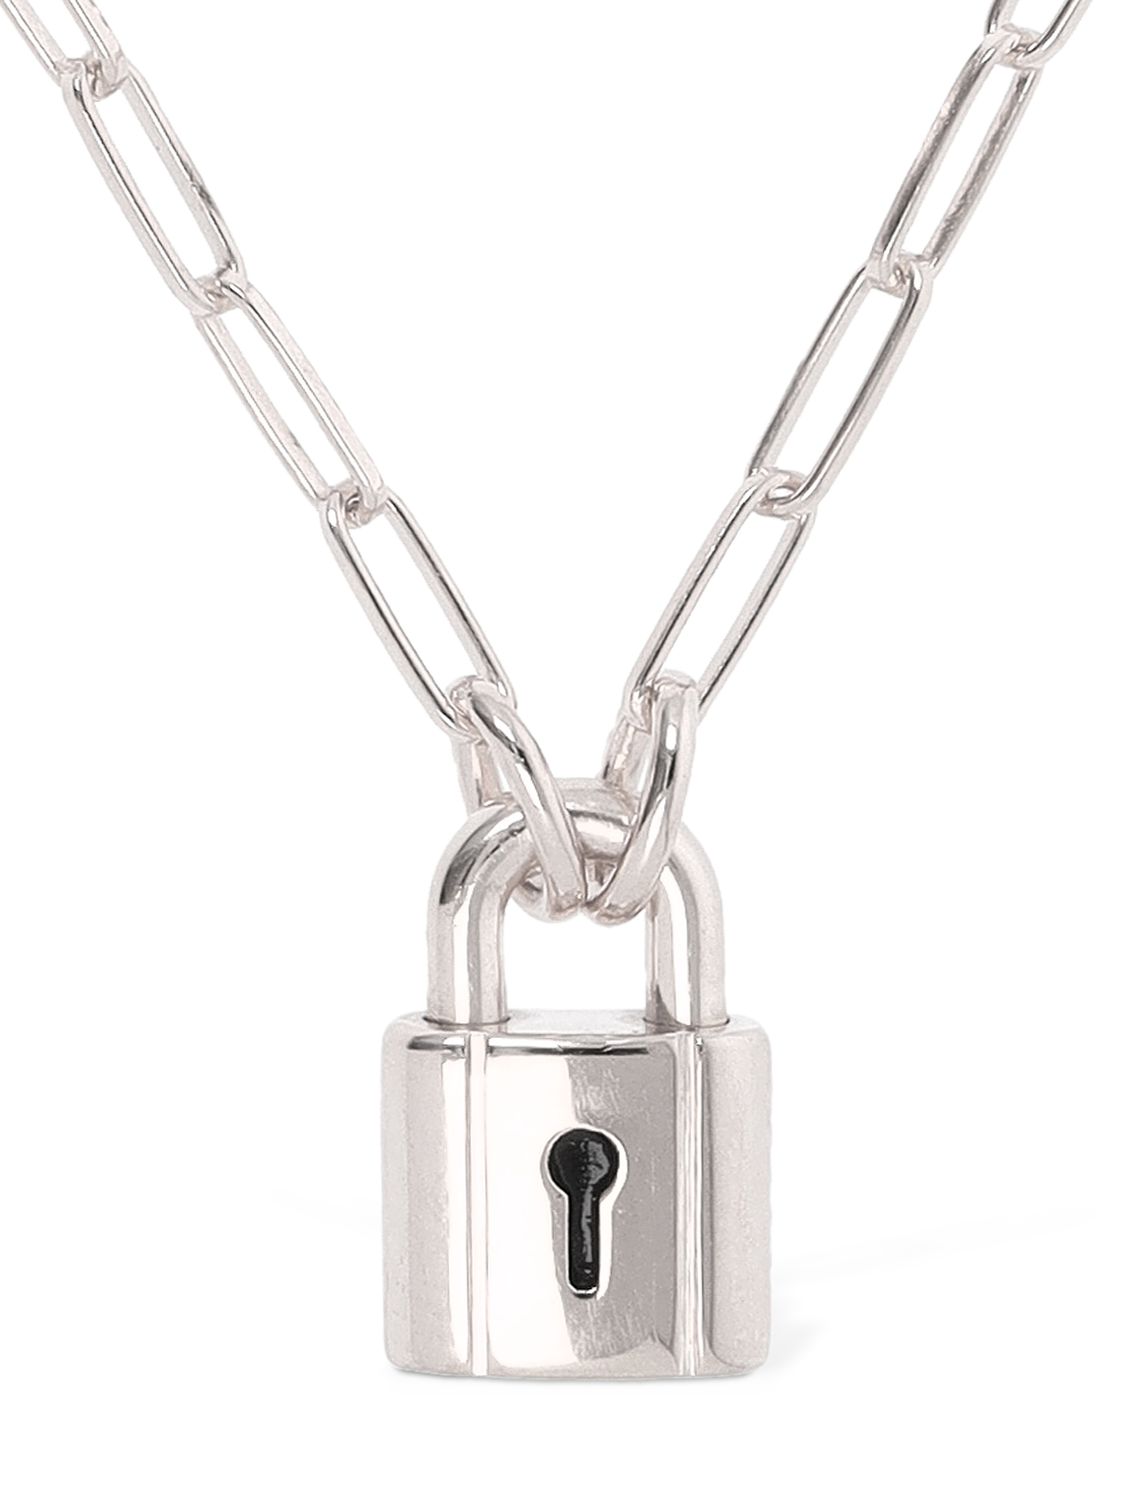 Silver Lock Chain Necklace